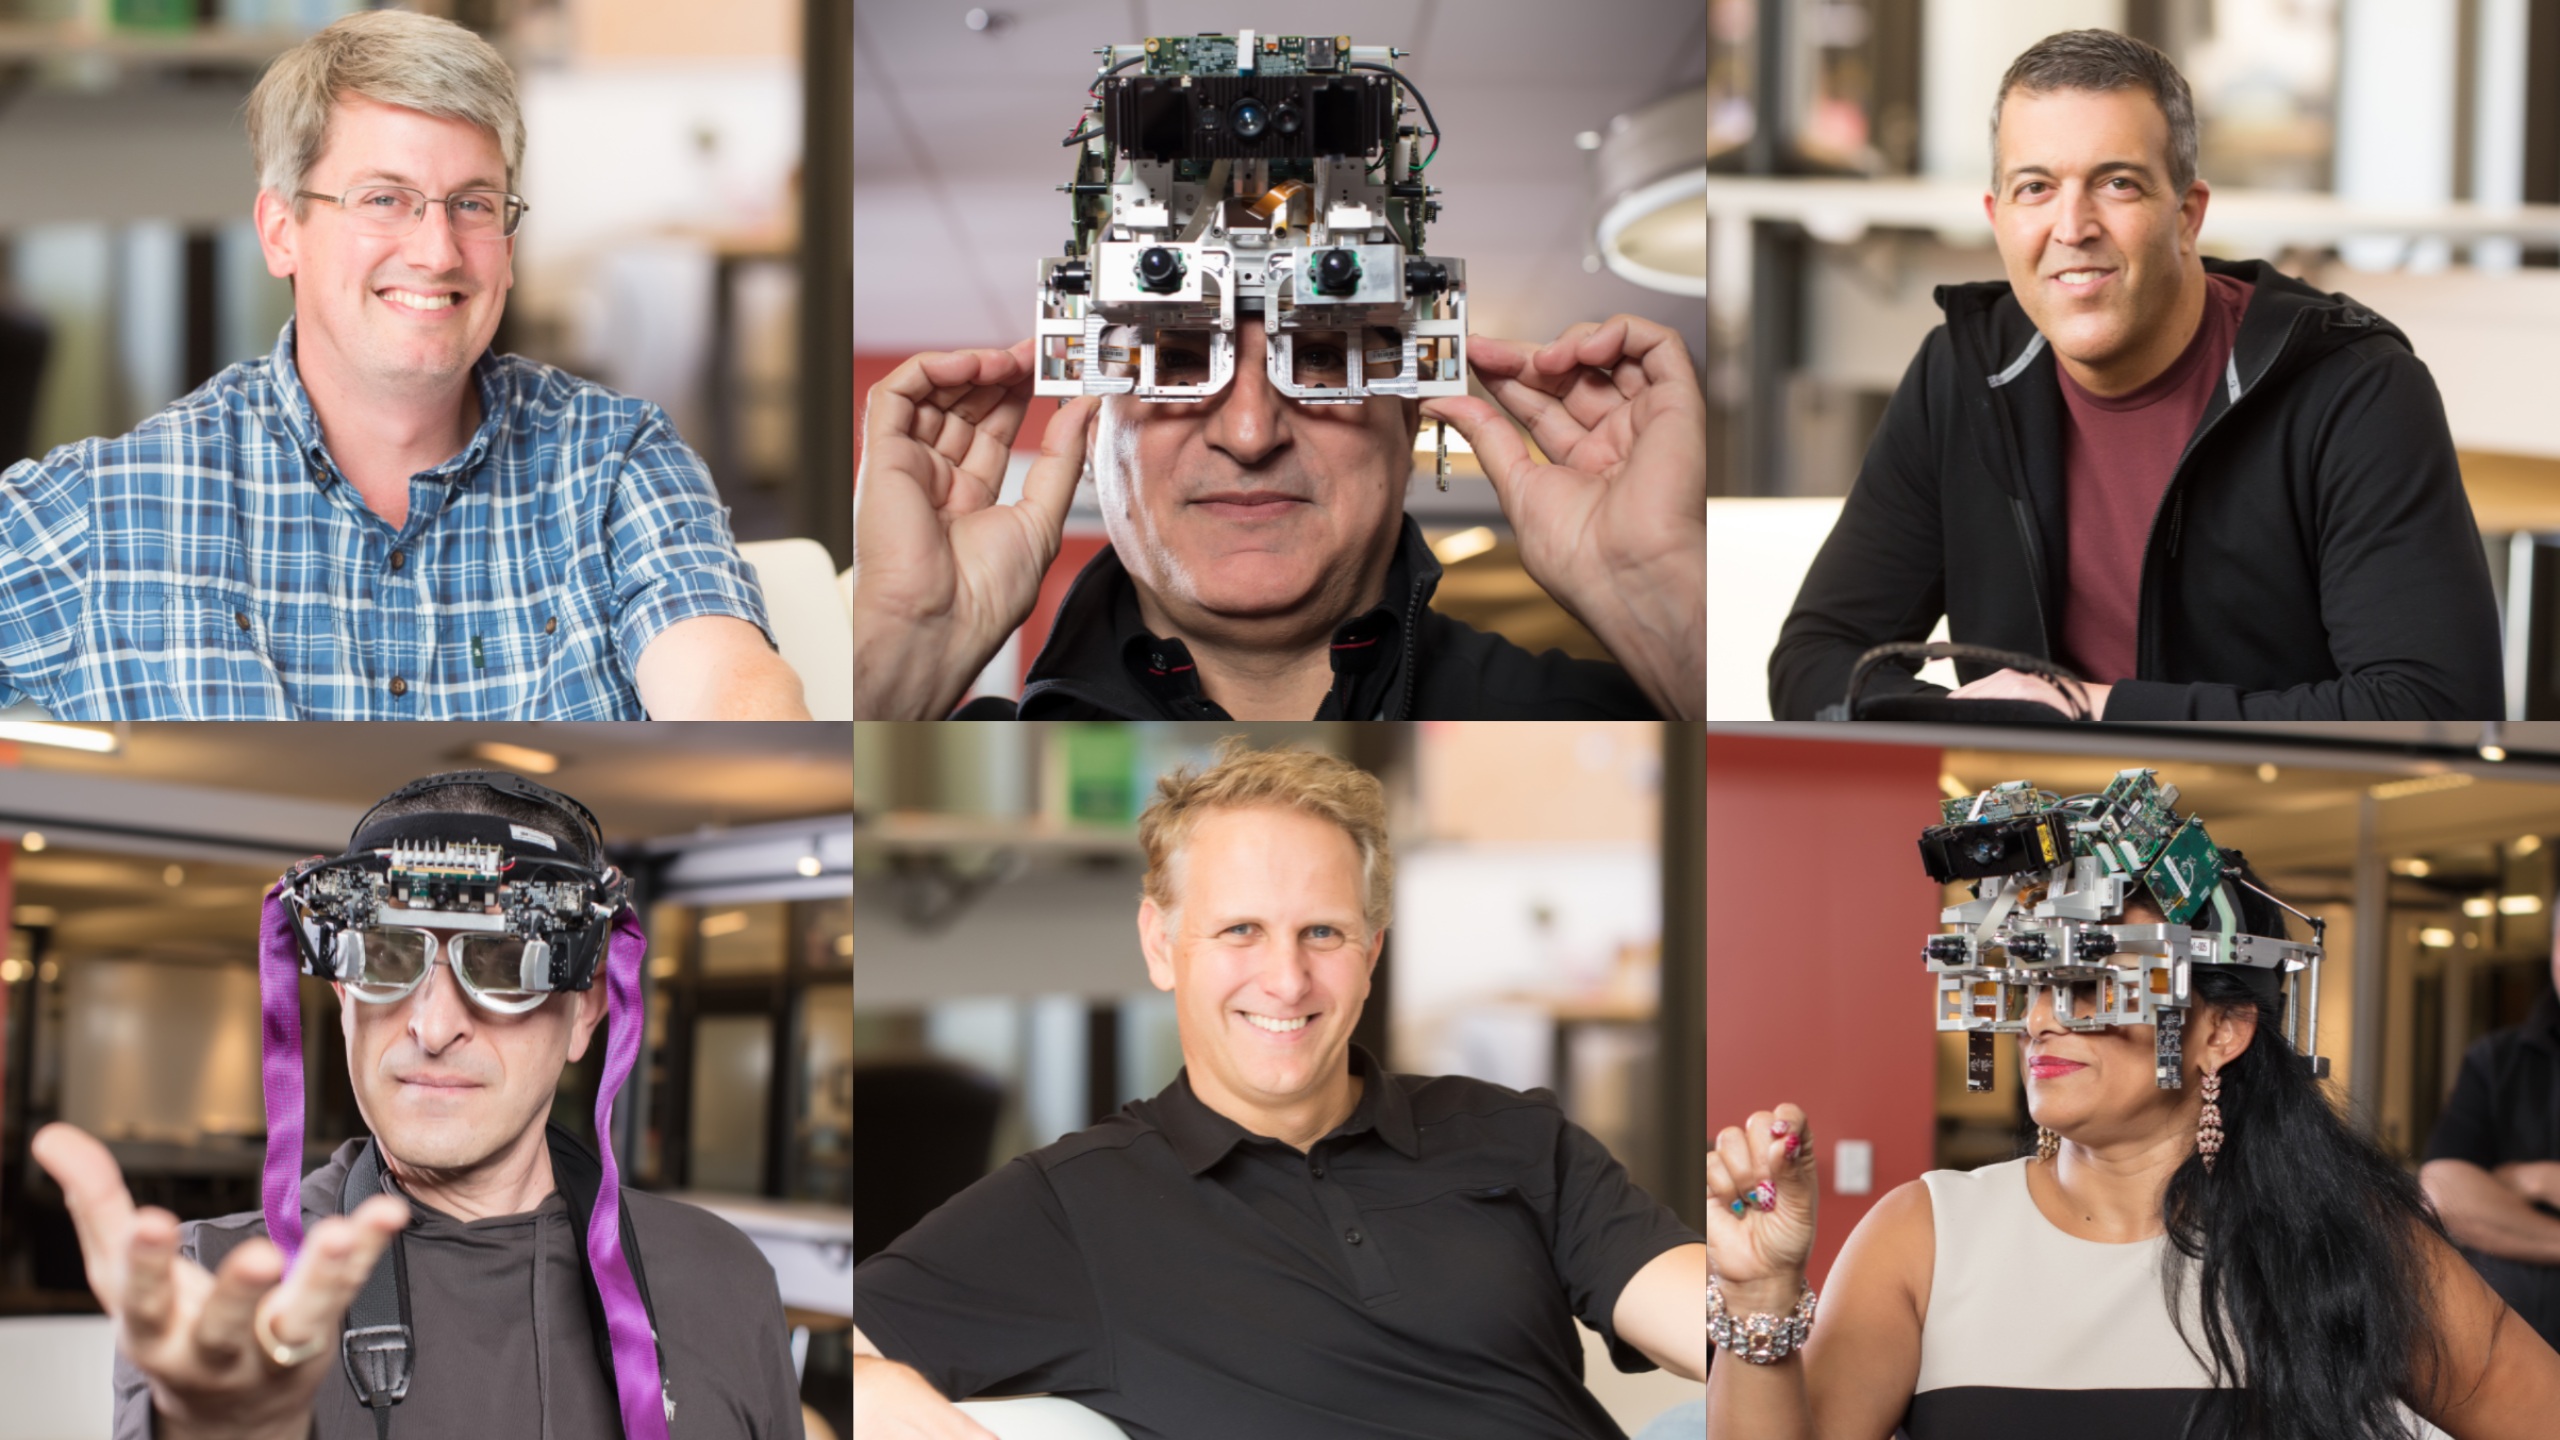 Members of the Silicon Valley HoloLens leadership team, from left to right: Patrick Codd, Michael Nikkhoo, Roy Riccomini, Scott Fullam, Rune Jensen, and Nagina Bhandary. 